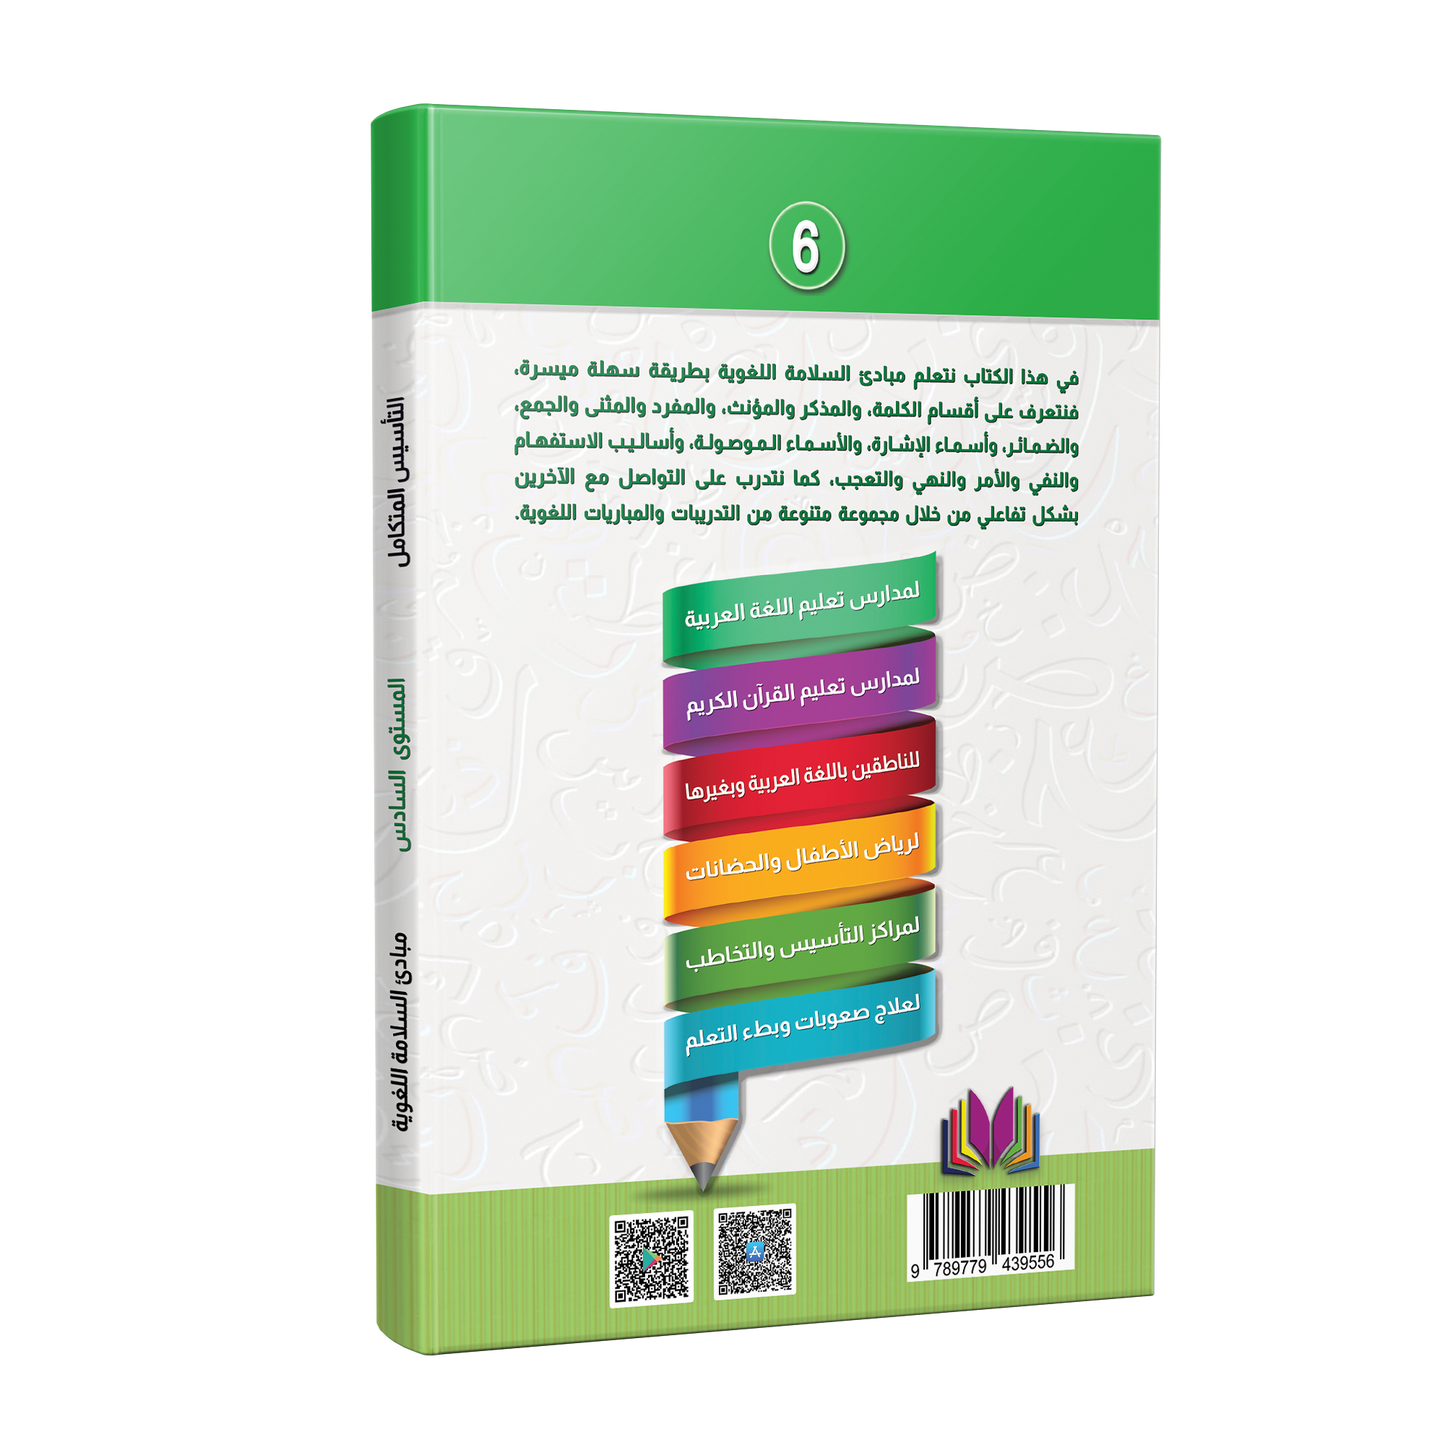 Integrated Foundation - Level 6 - التاسيس متكامل كتاب مبادئ السلامة اللغوية